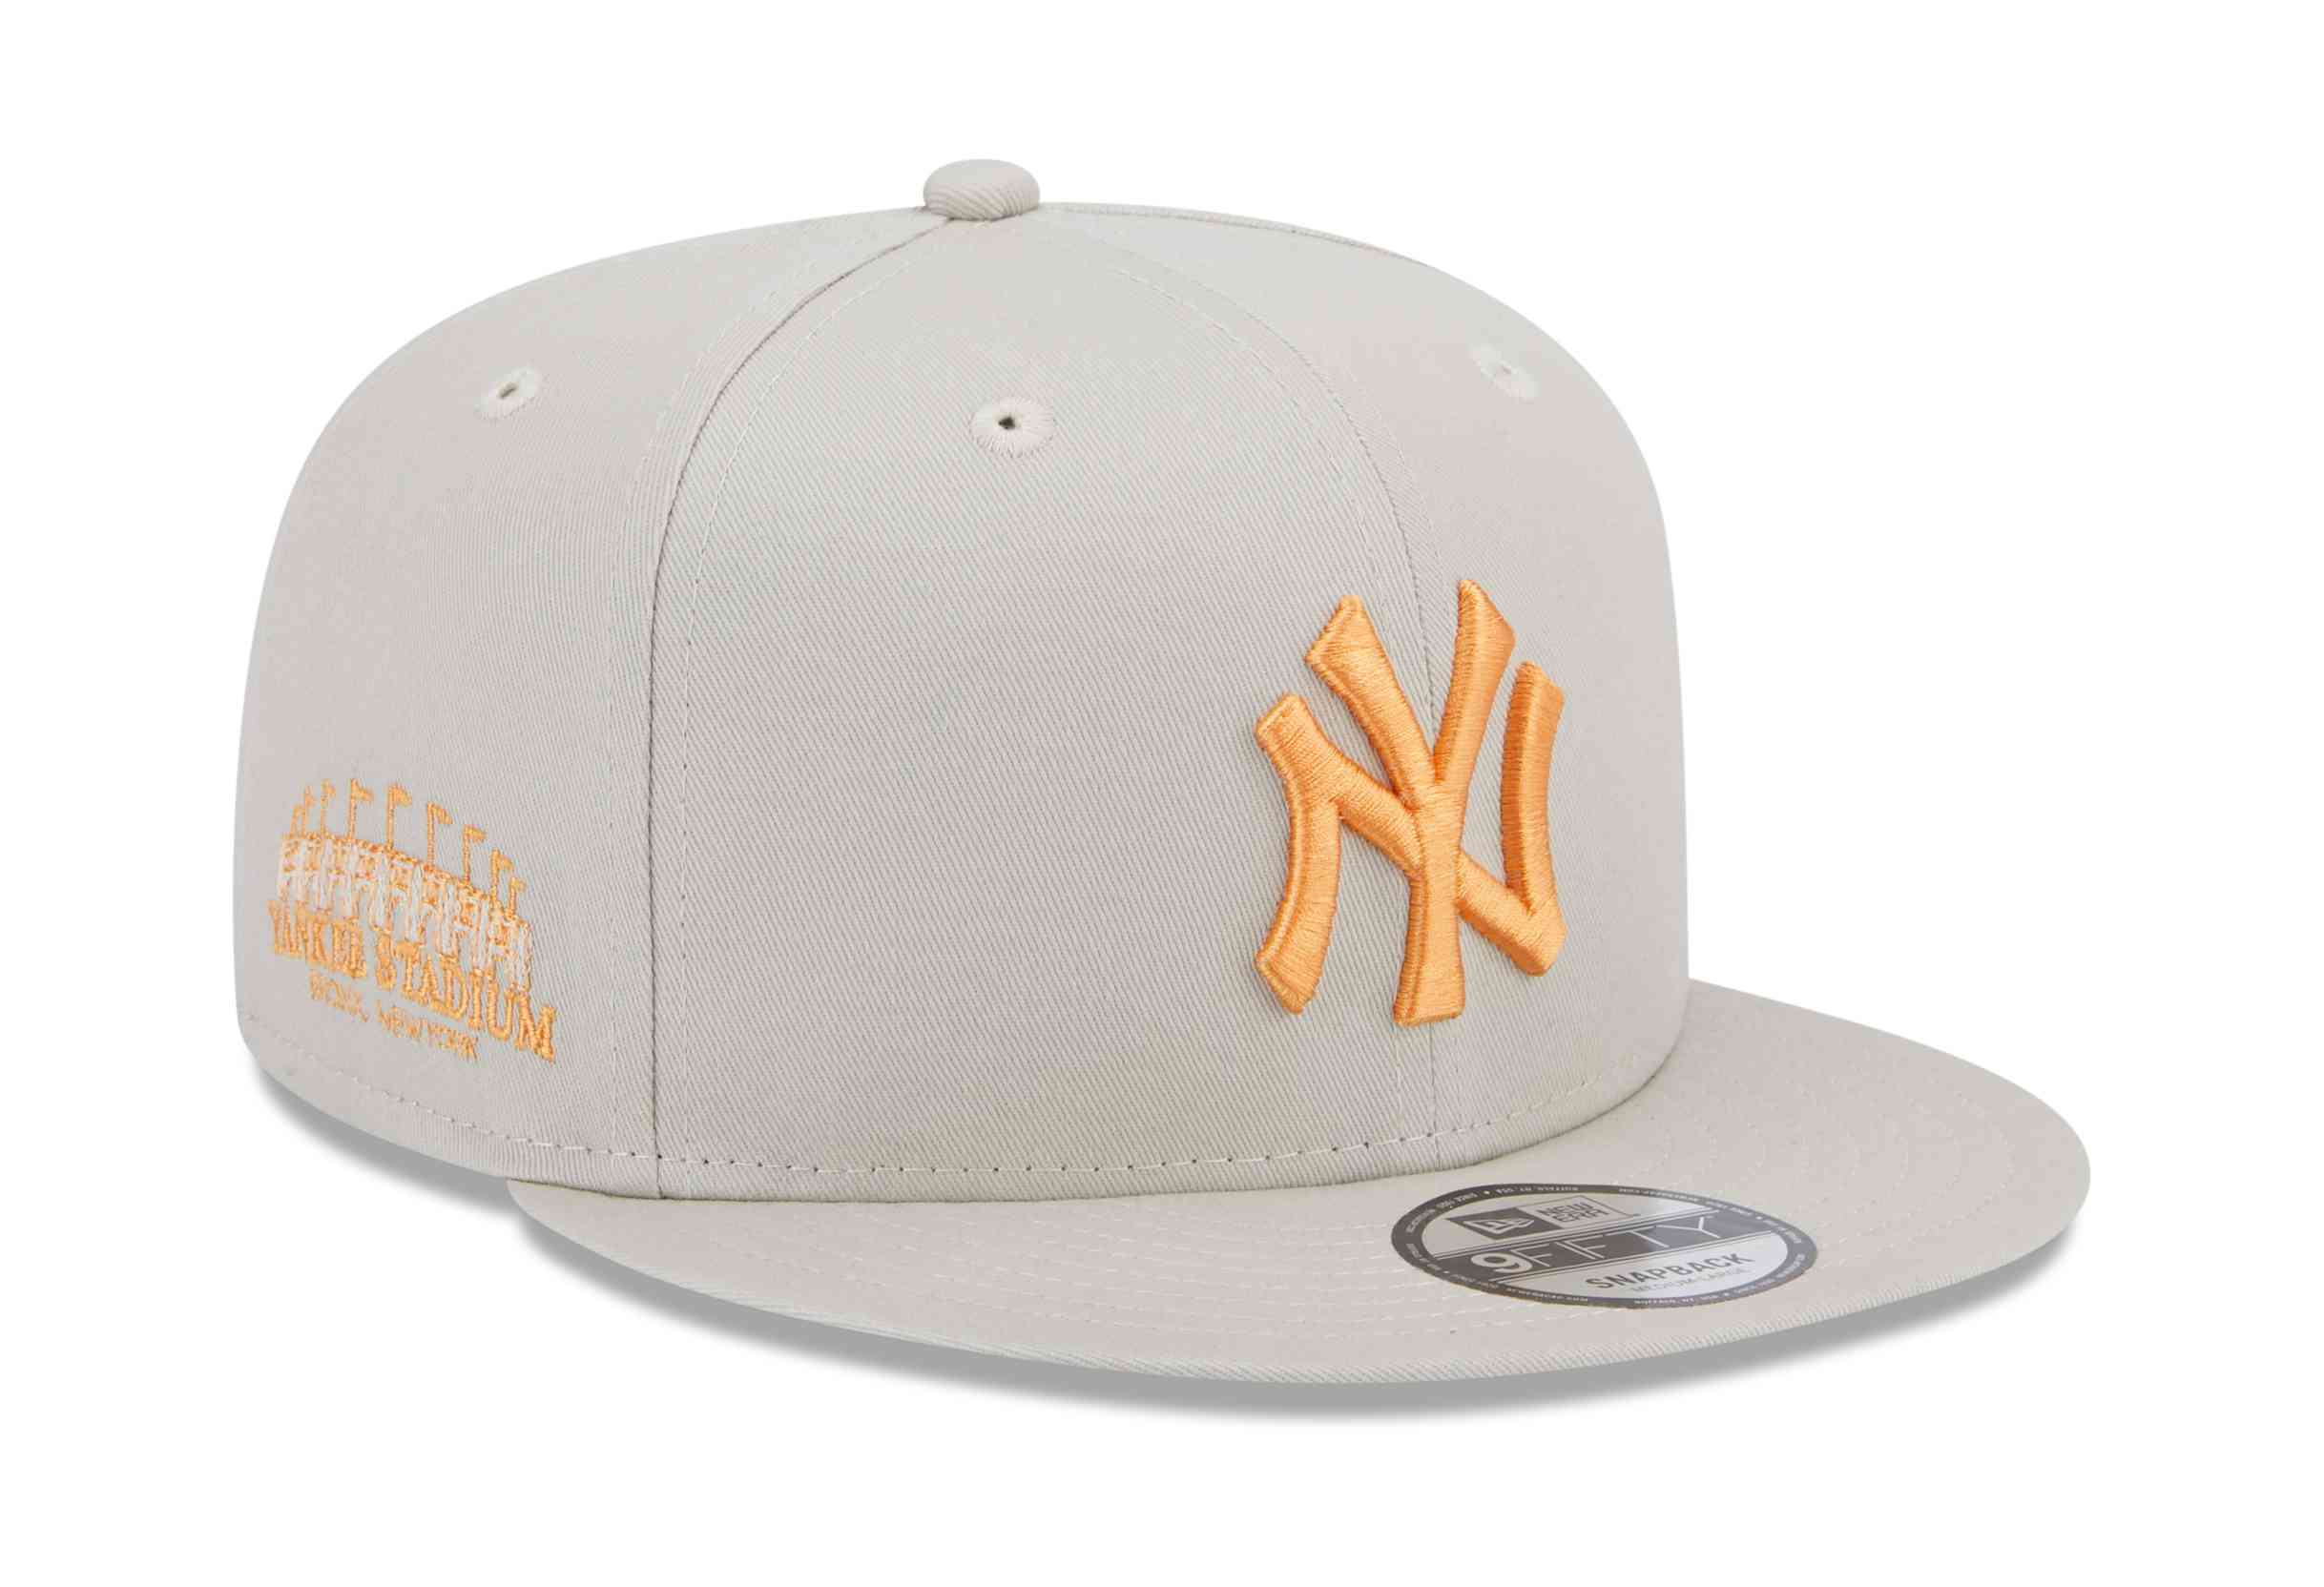 New Era - MLB New York Yankees Side Patch 9Fifty Snapback Cap